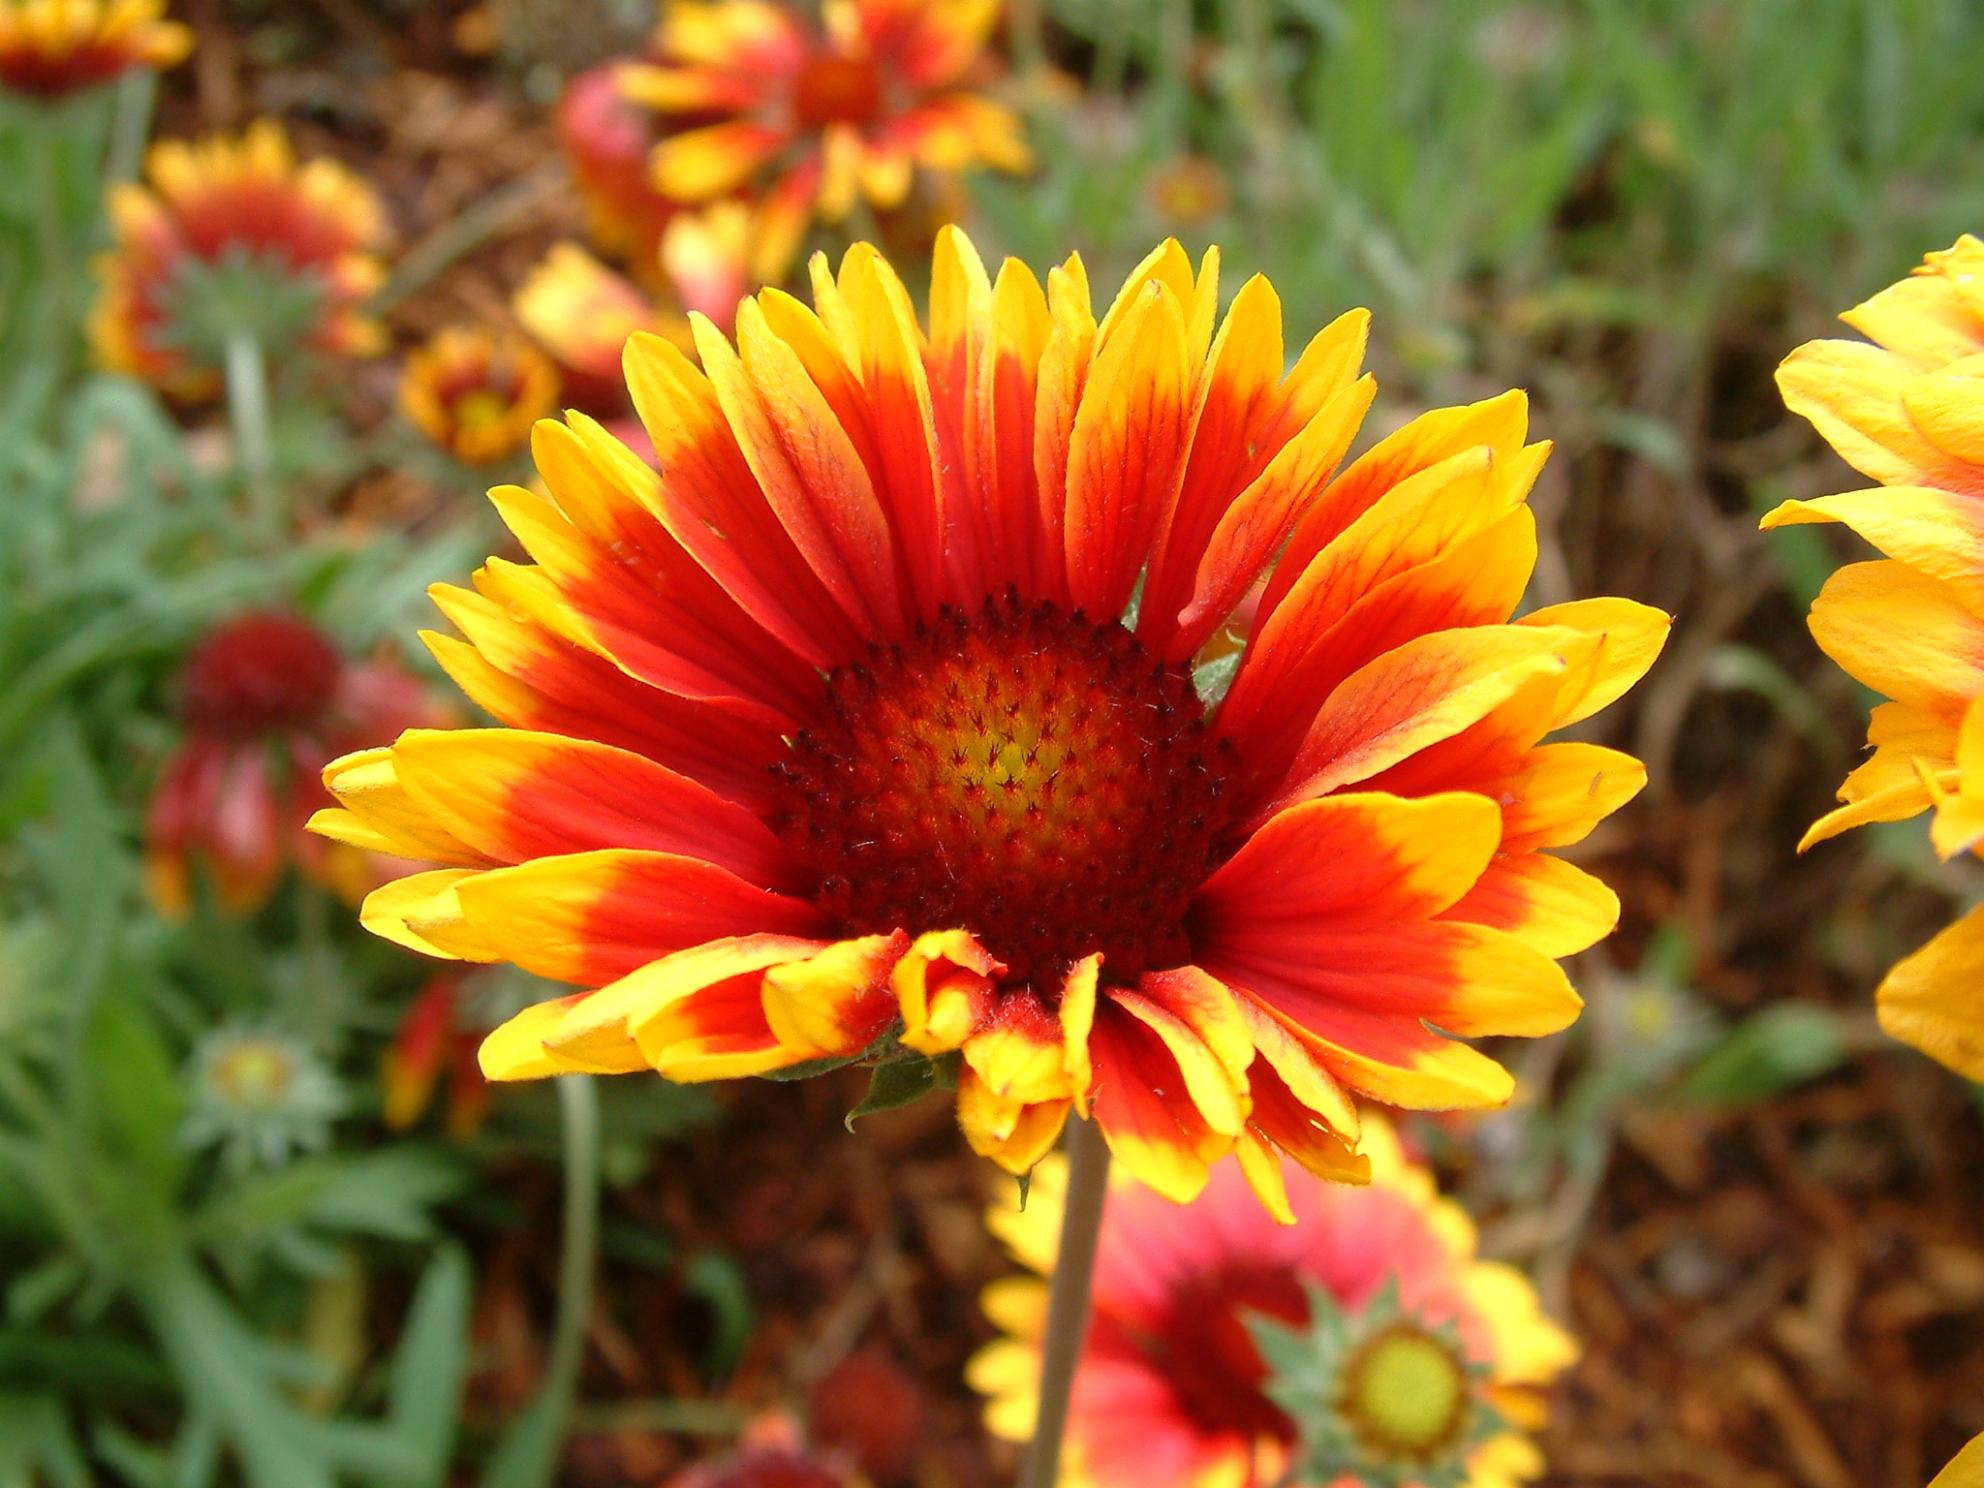 Photo of a gaillardia flower from Gardensoft website